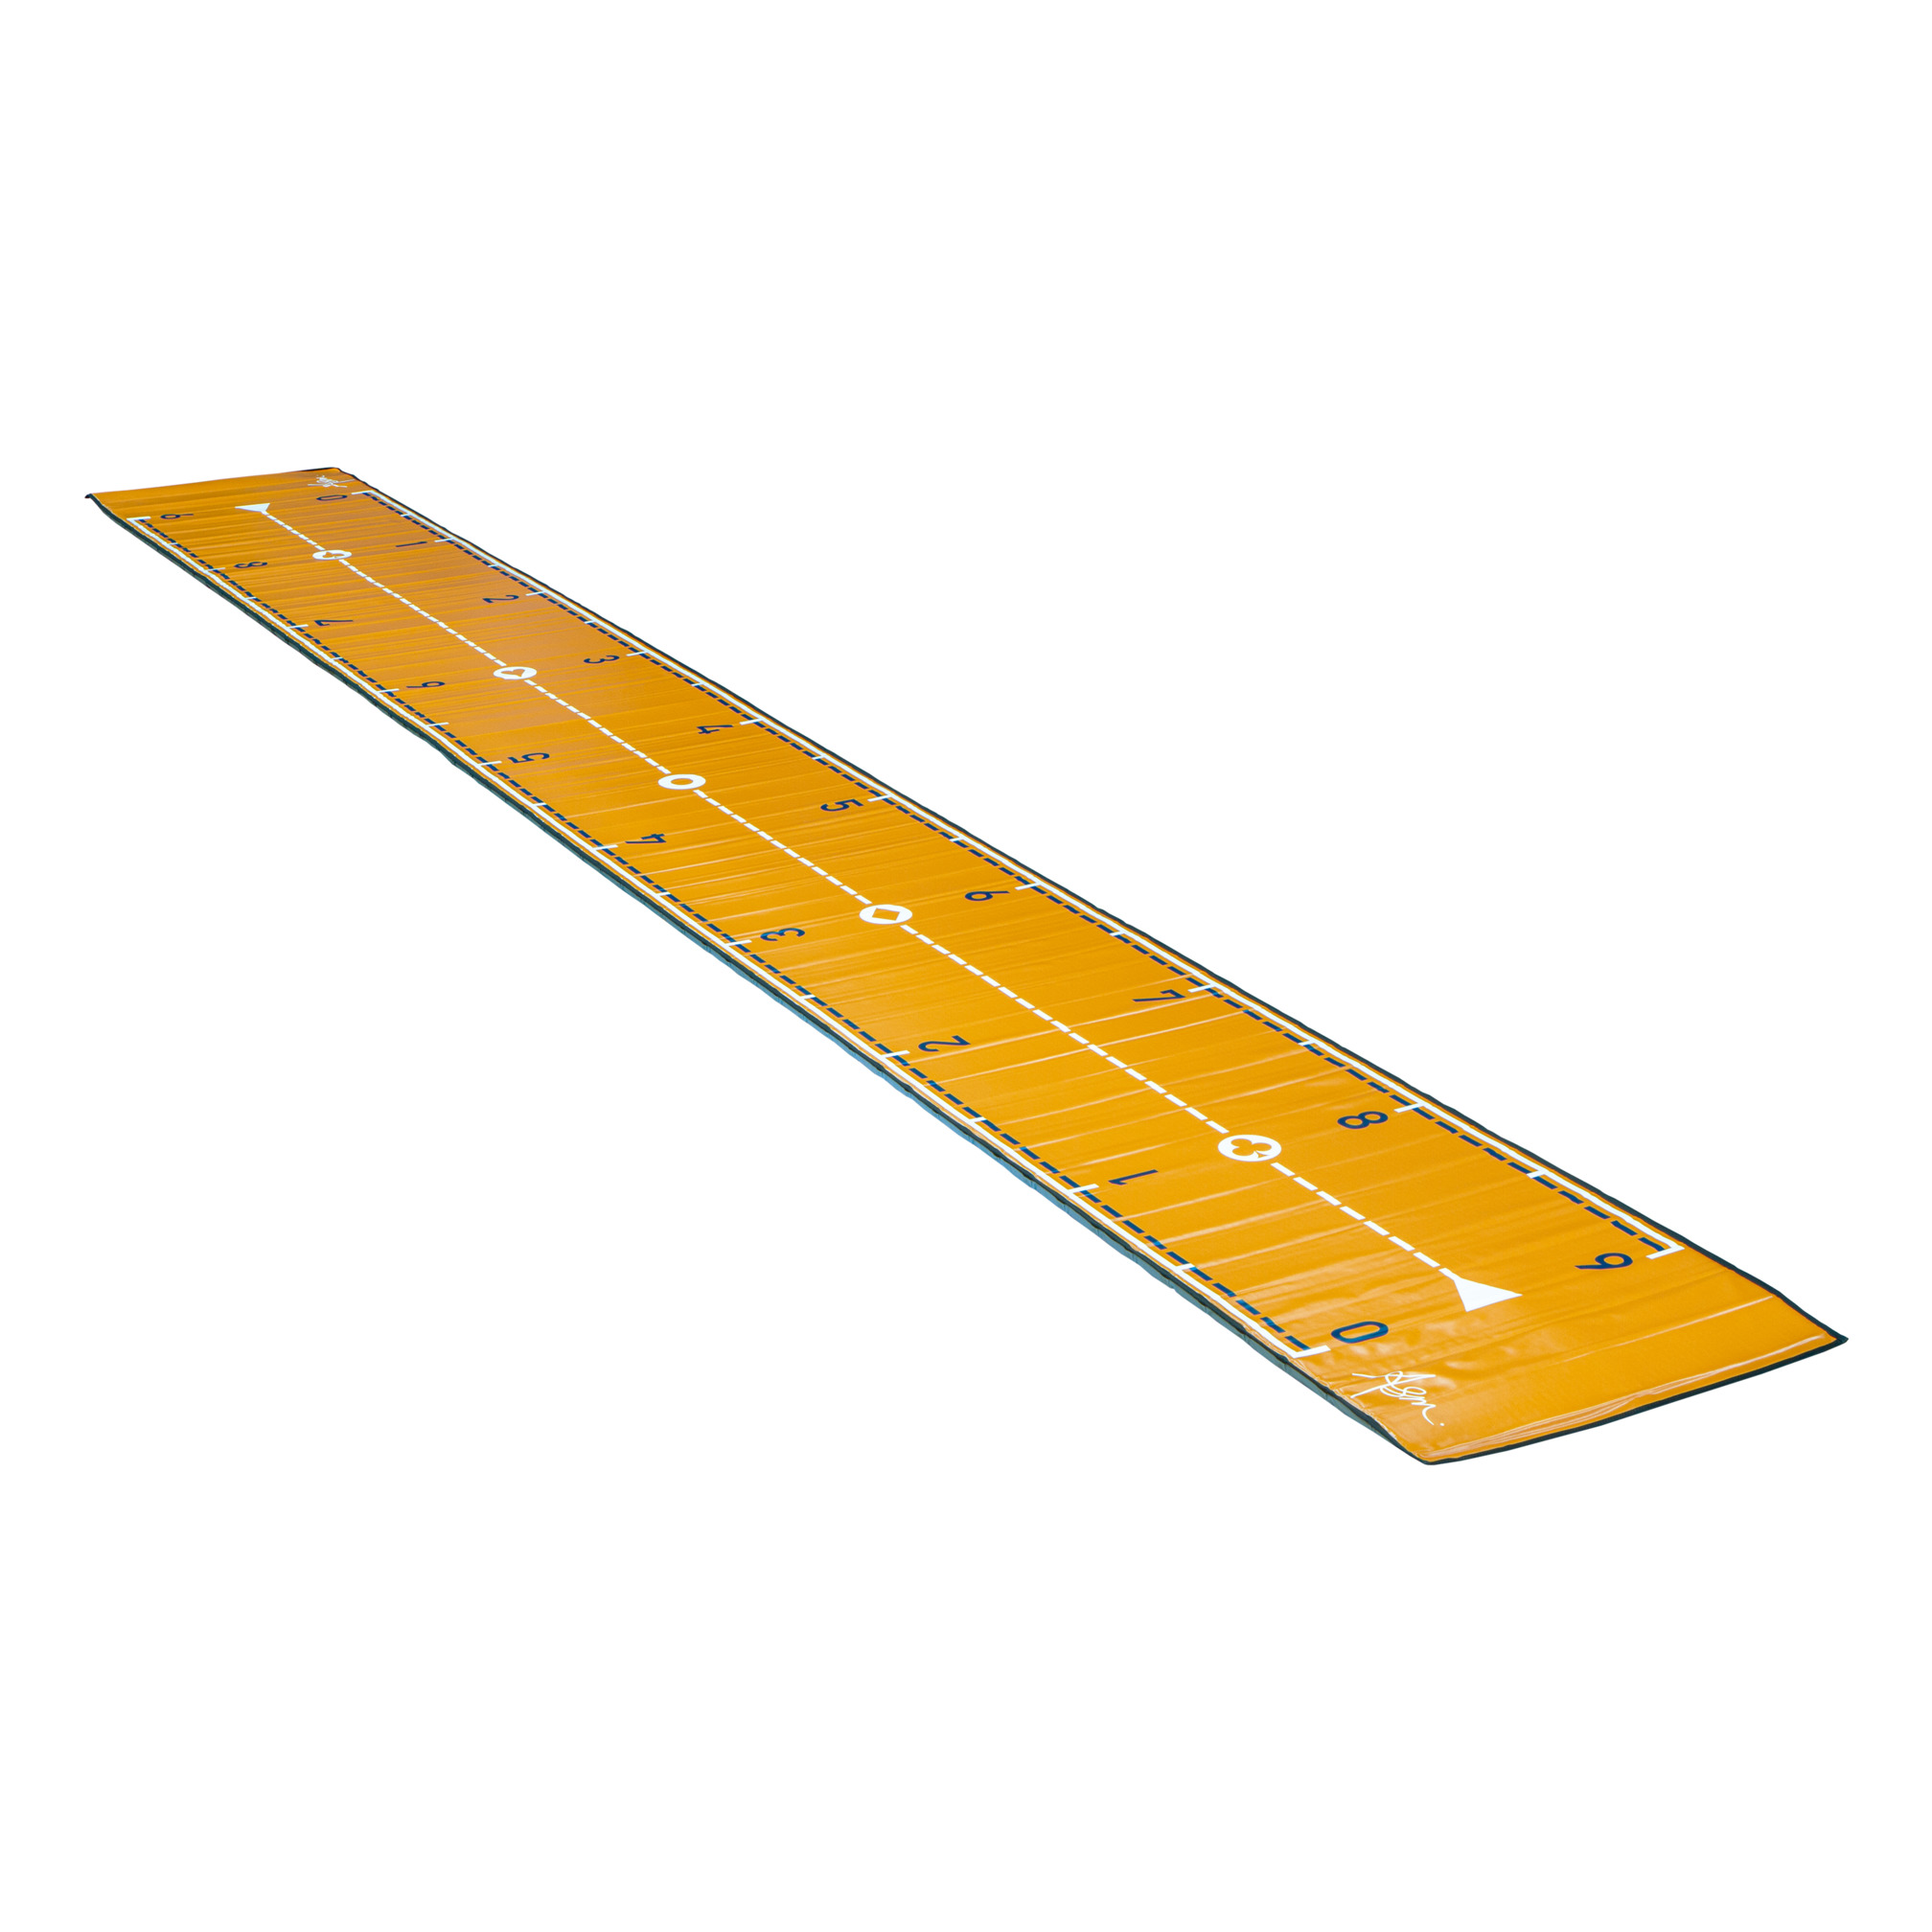 ASM long mat Ruler 10 m, sandwich padding